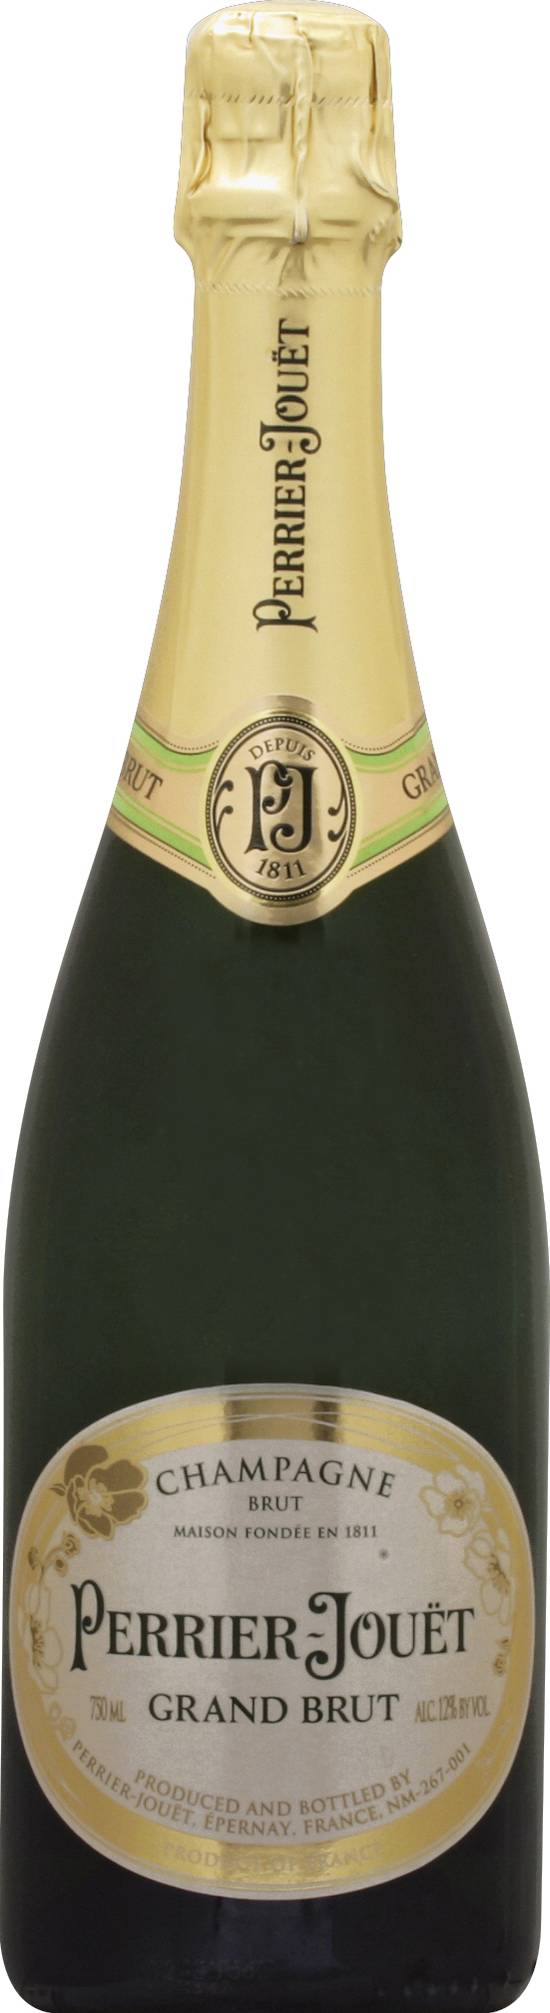 Perrier-Jouet Champagne Grand Brut Wine (750 ml)